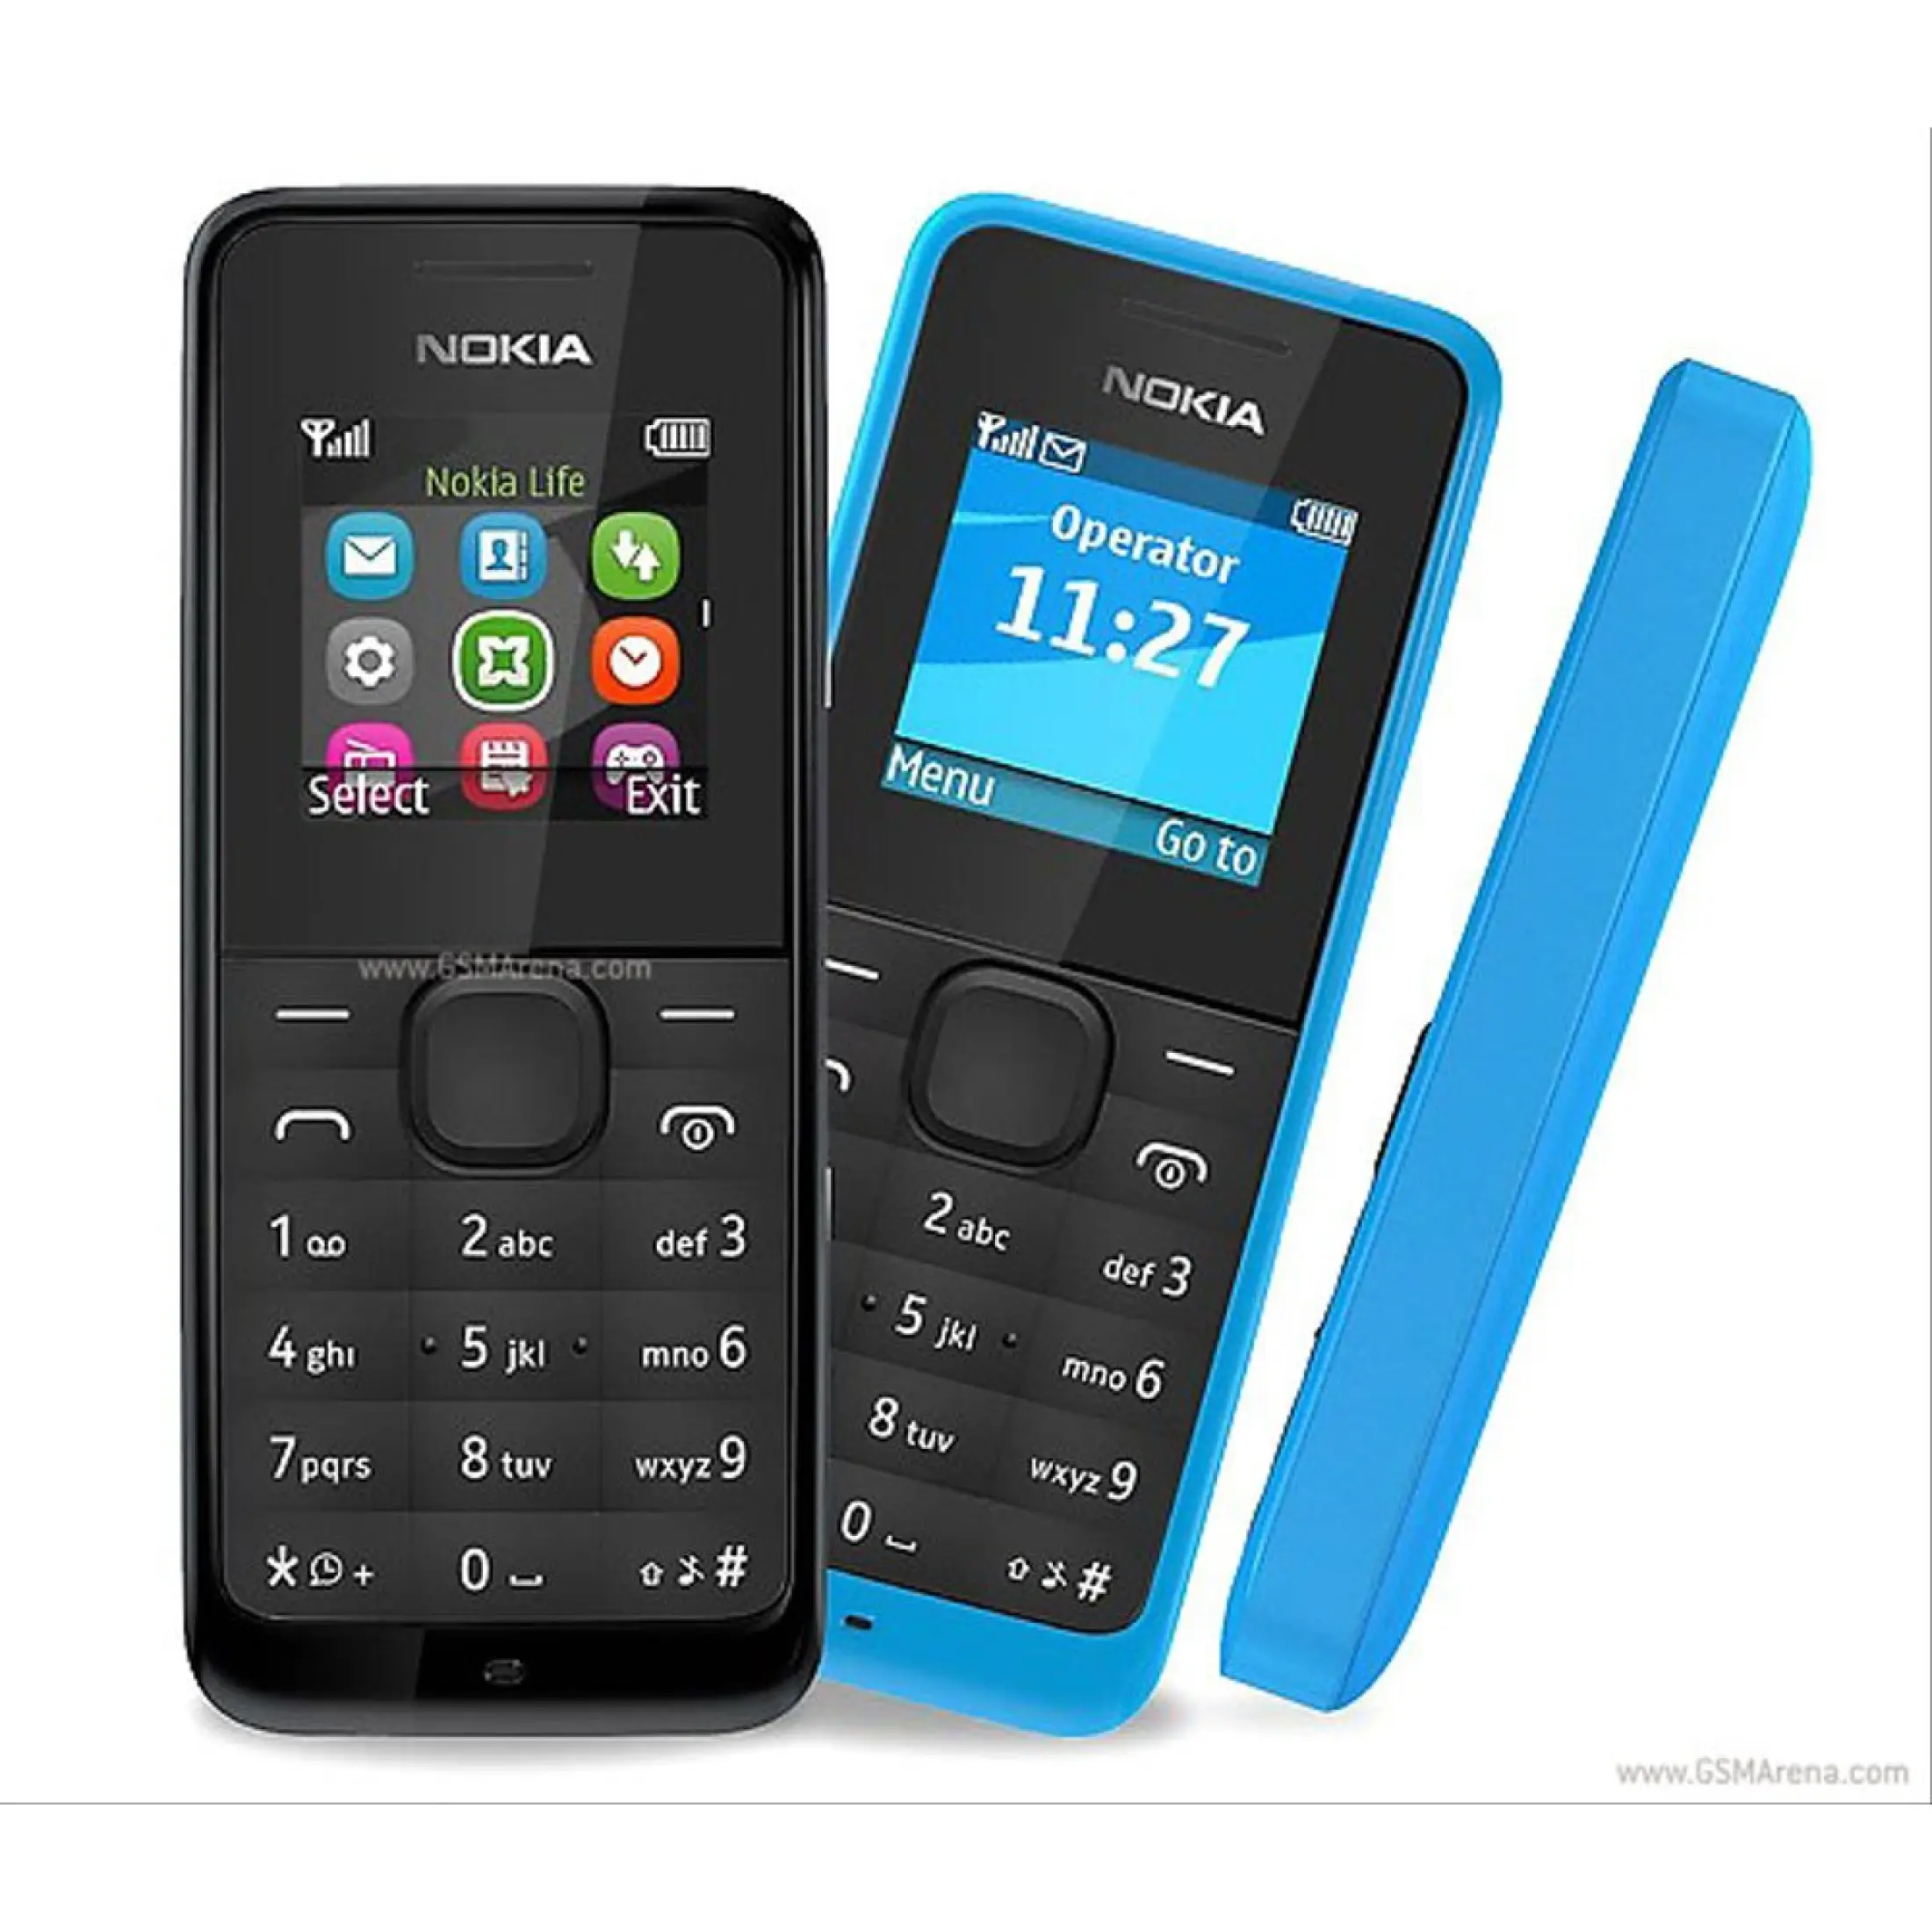 Halo Nokia 105 Fm Hp Murah Mobile Phone Single Sim Gsm Hp Nokia Jadul Murah Handphone Lazada Indonesia